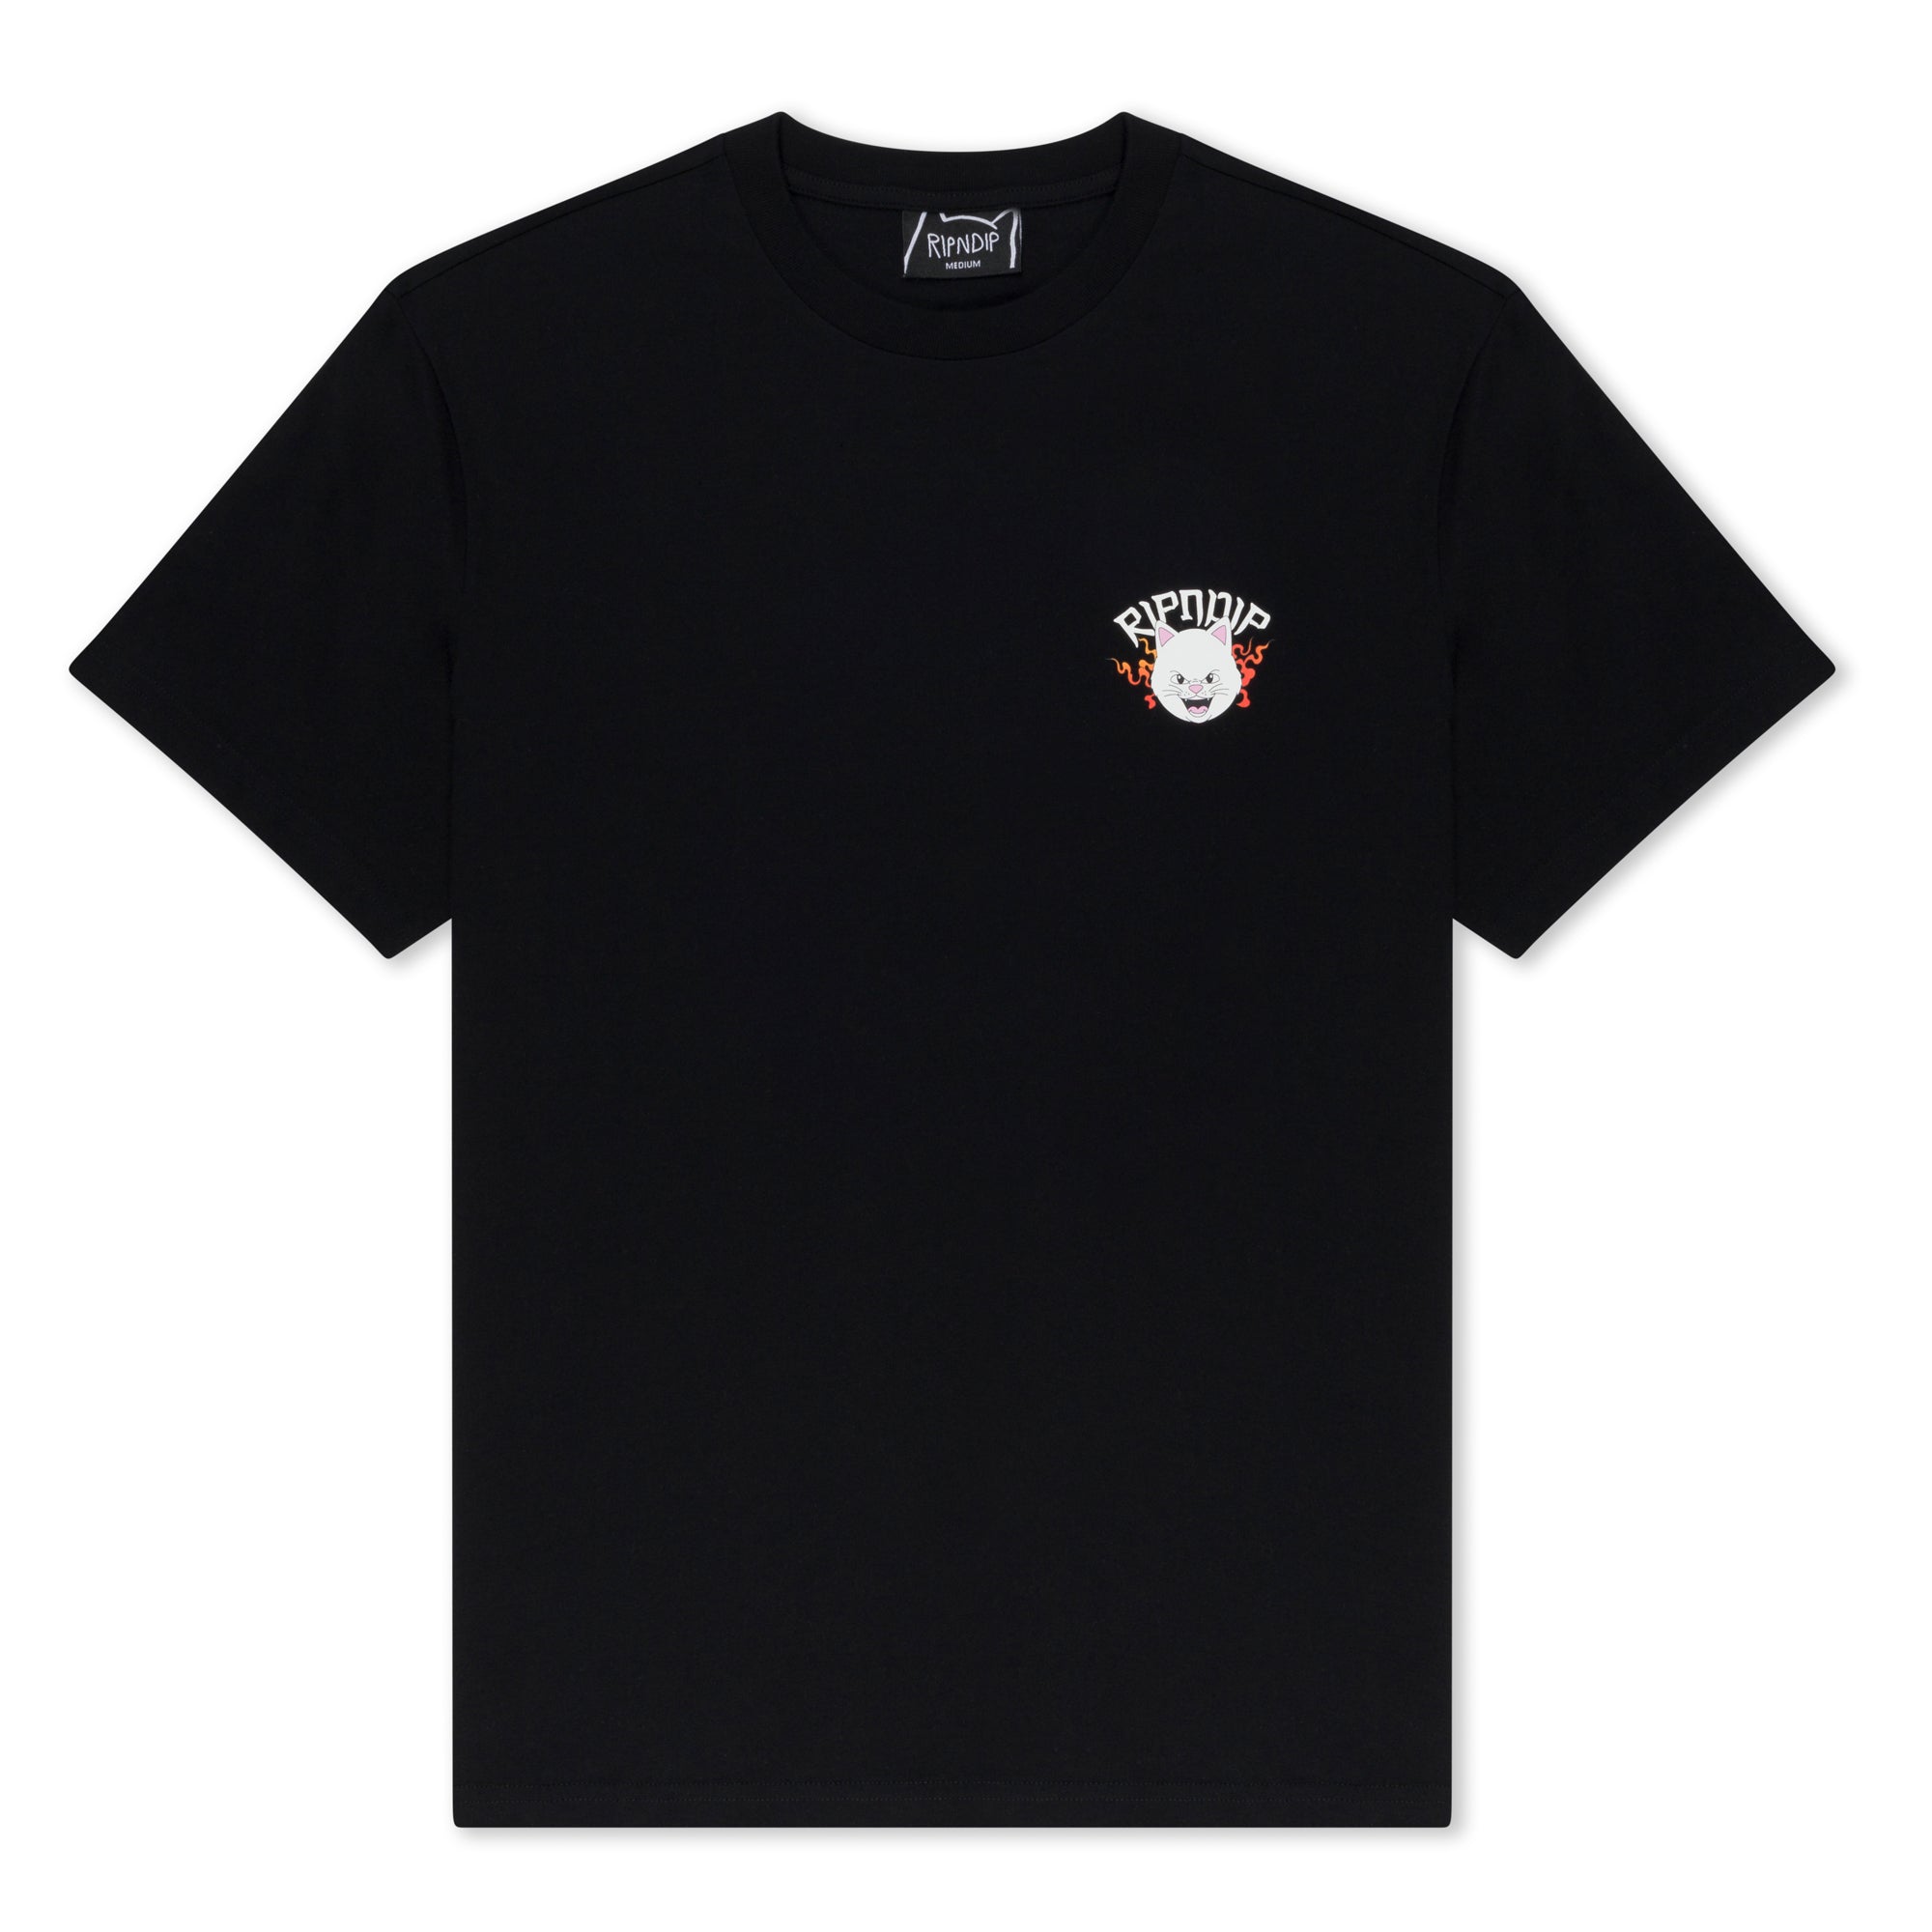 Camiseta High Baby Preto - Matriz Skate Shop Online